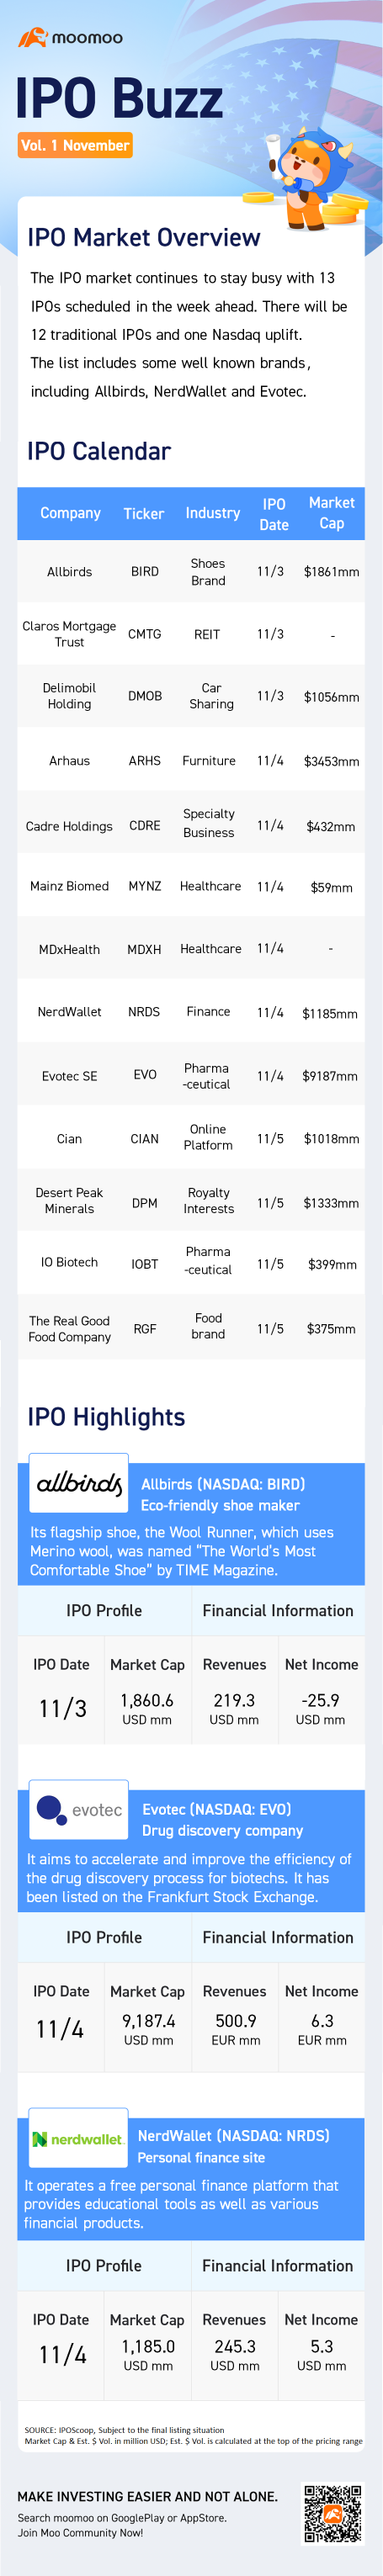 IPO Buzz | Evotec 和 Allbirds 领先 13 次首次公开募股